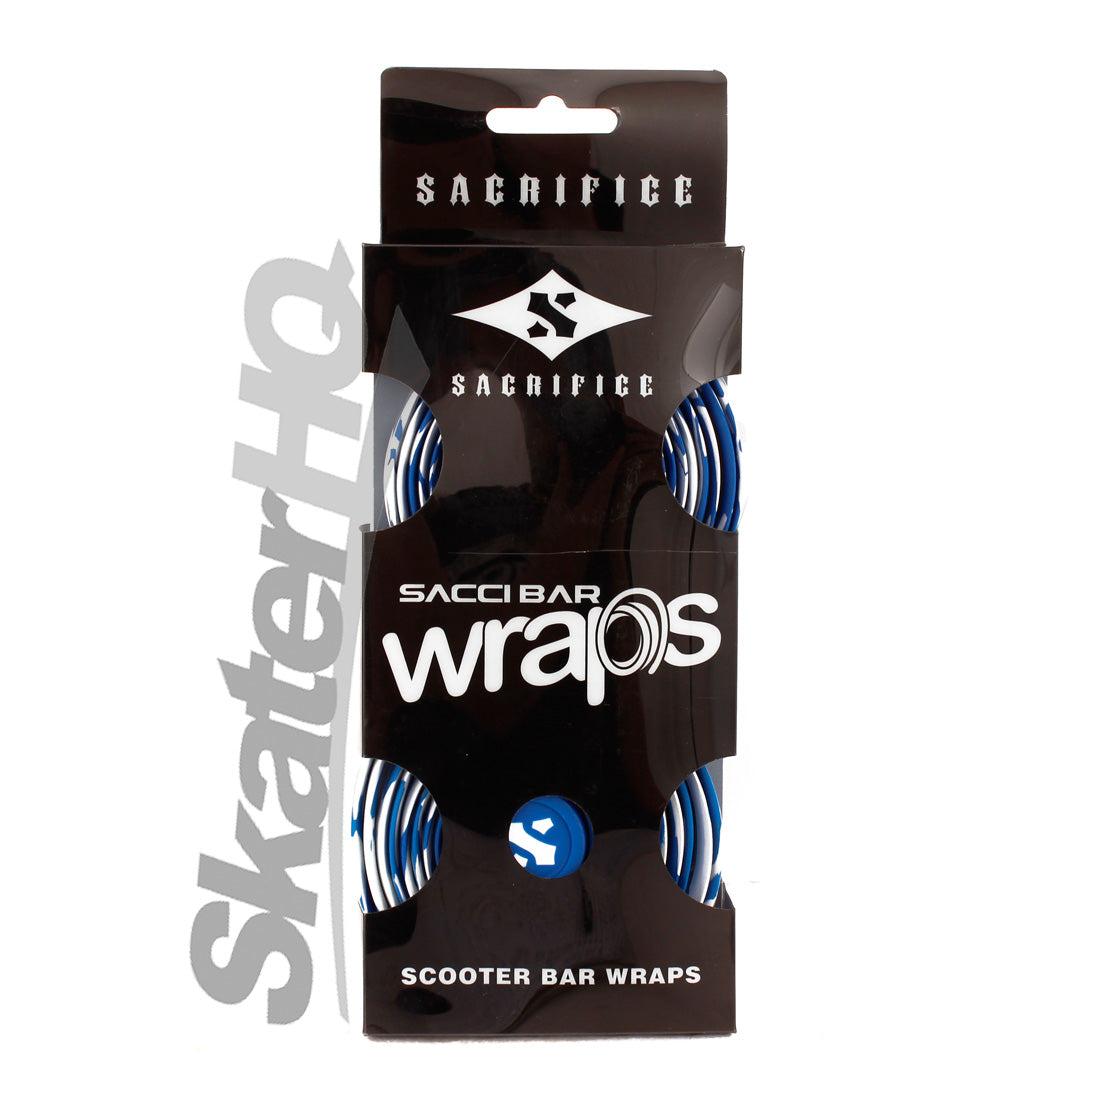 Sacrifice Sacci Bar Wrap - Blue Tie Dye Scooter Grips